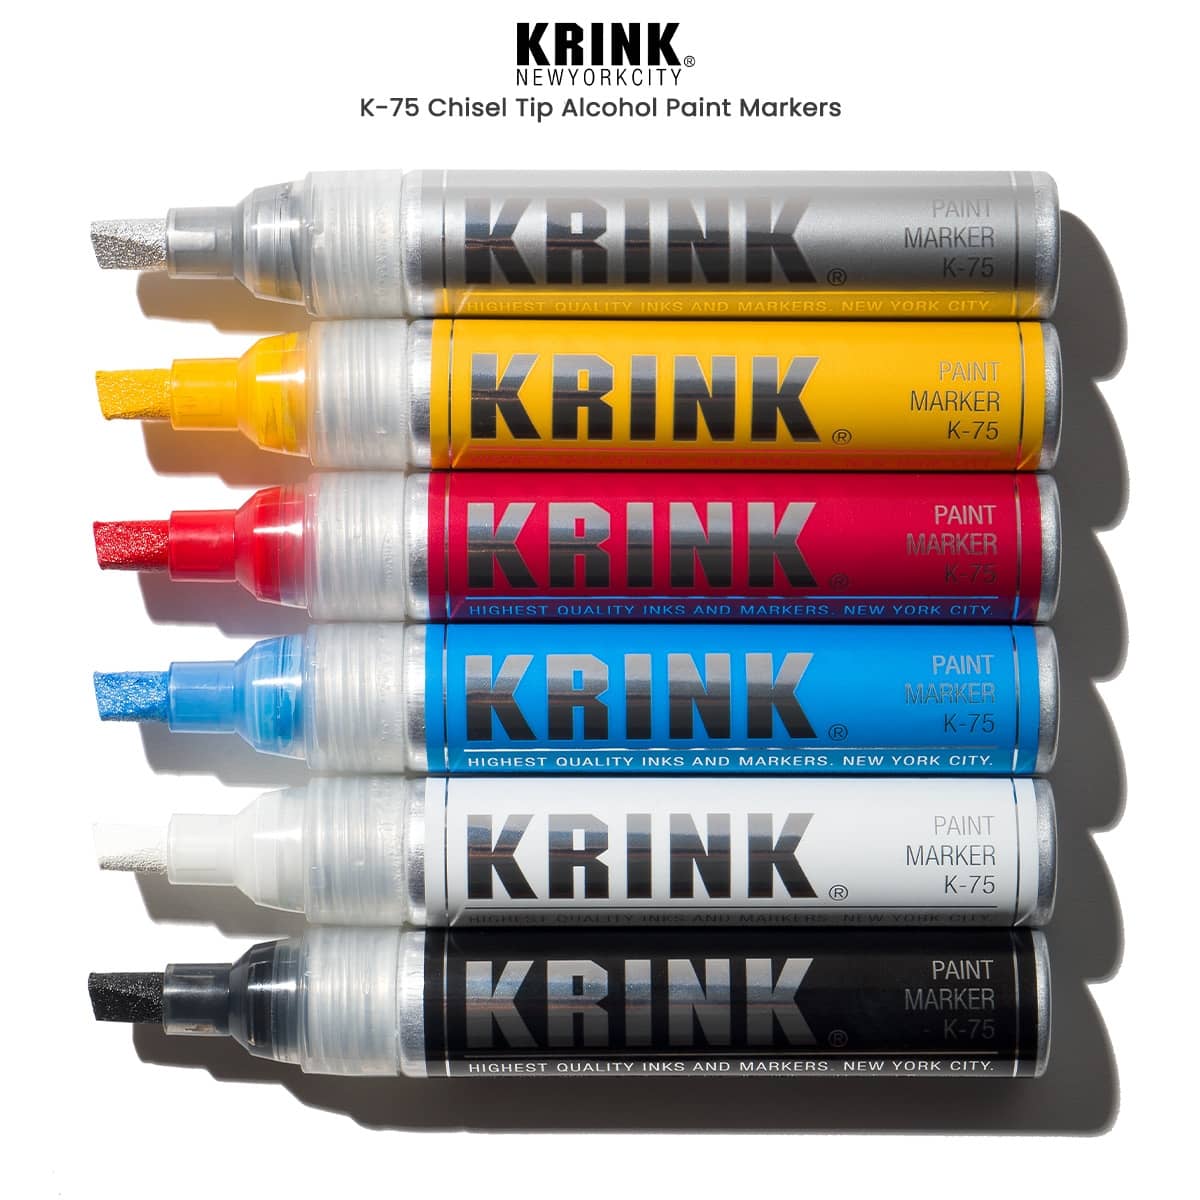 https://www.jerrysartarama.com/media/catalog/product/k/r/krink-k75-alcohol-paint-markers-main_1.jpg